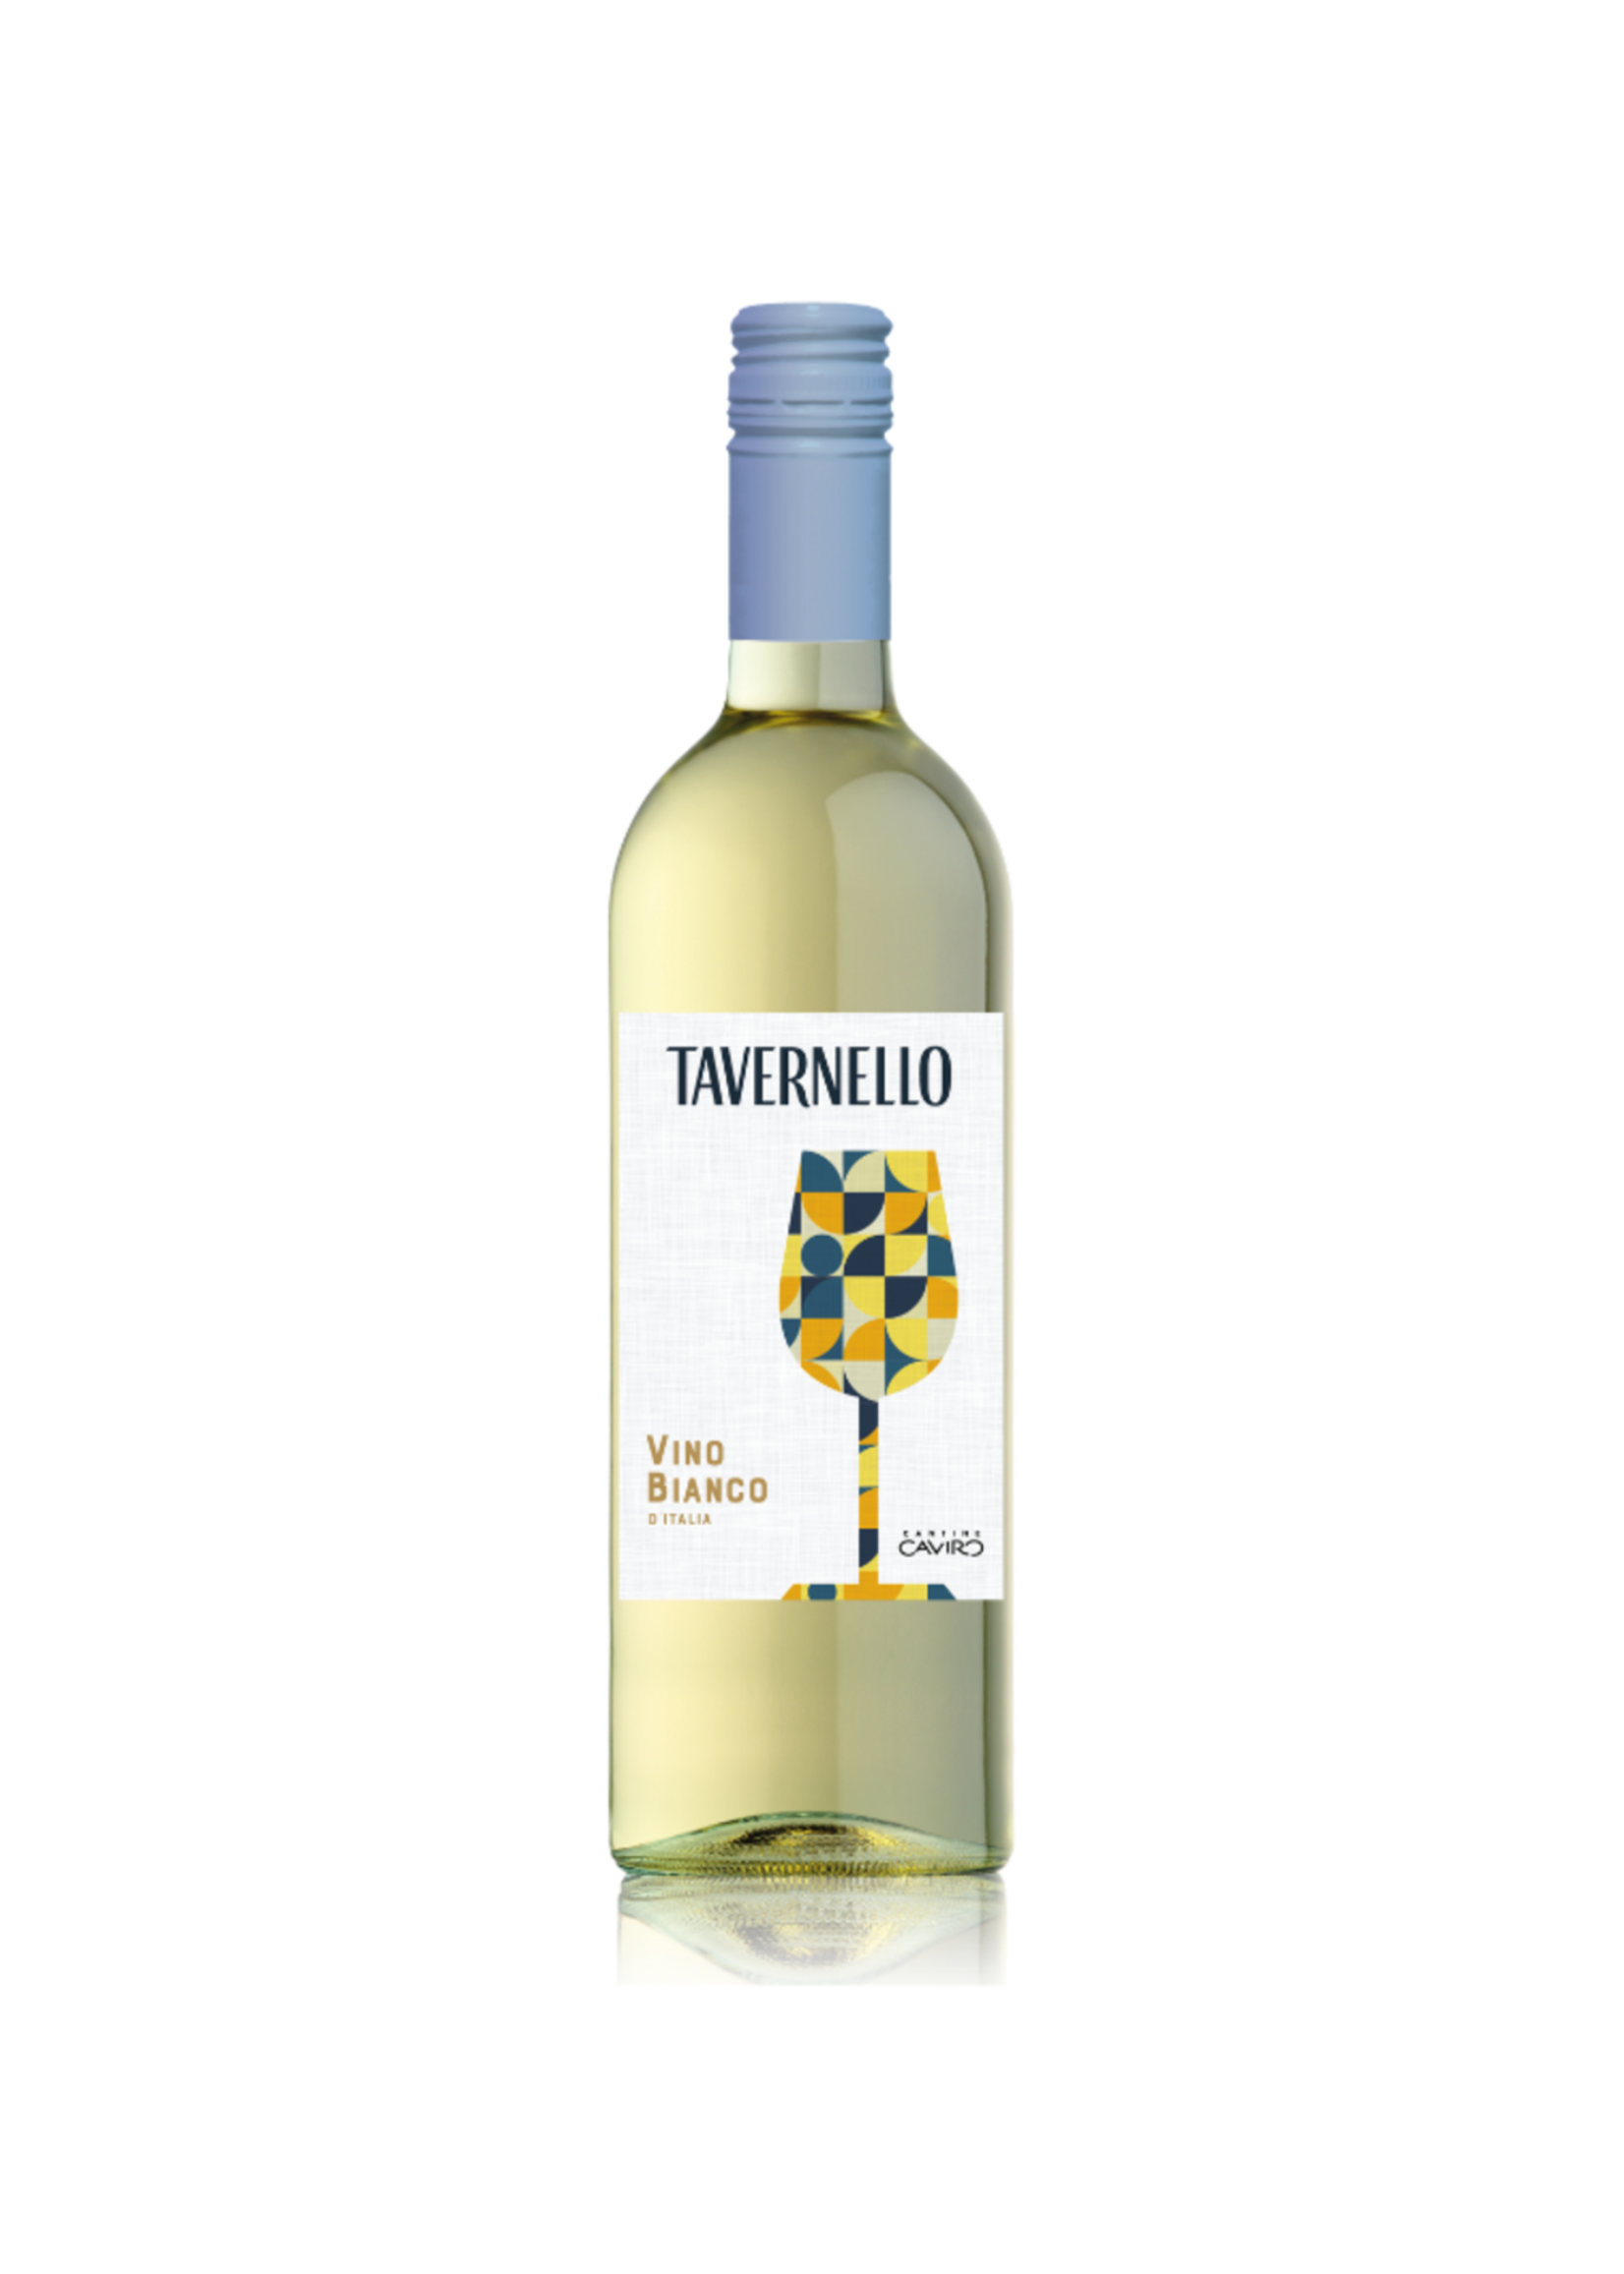 Tavernello Tavernello Vino Bianco Caviro